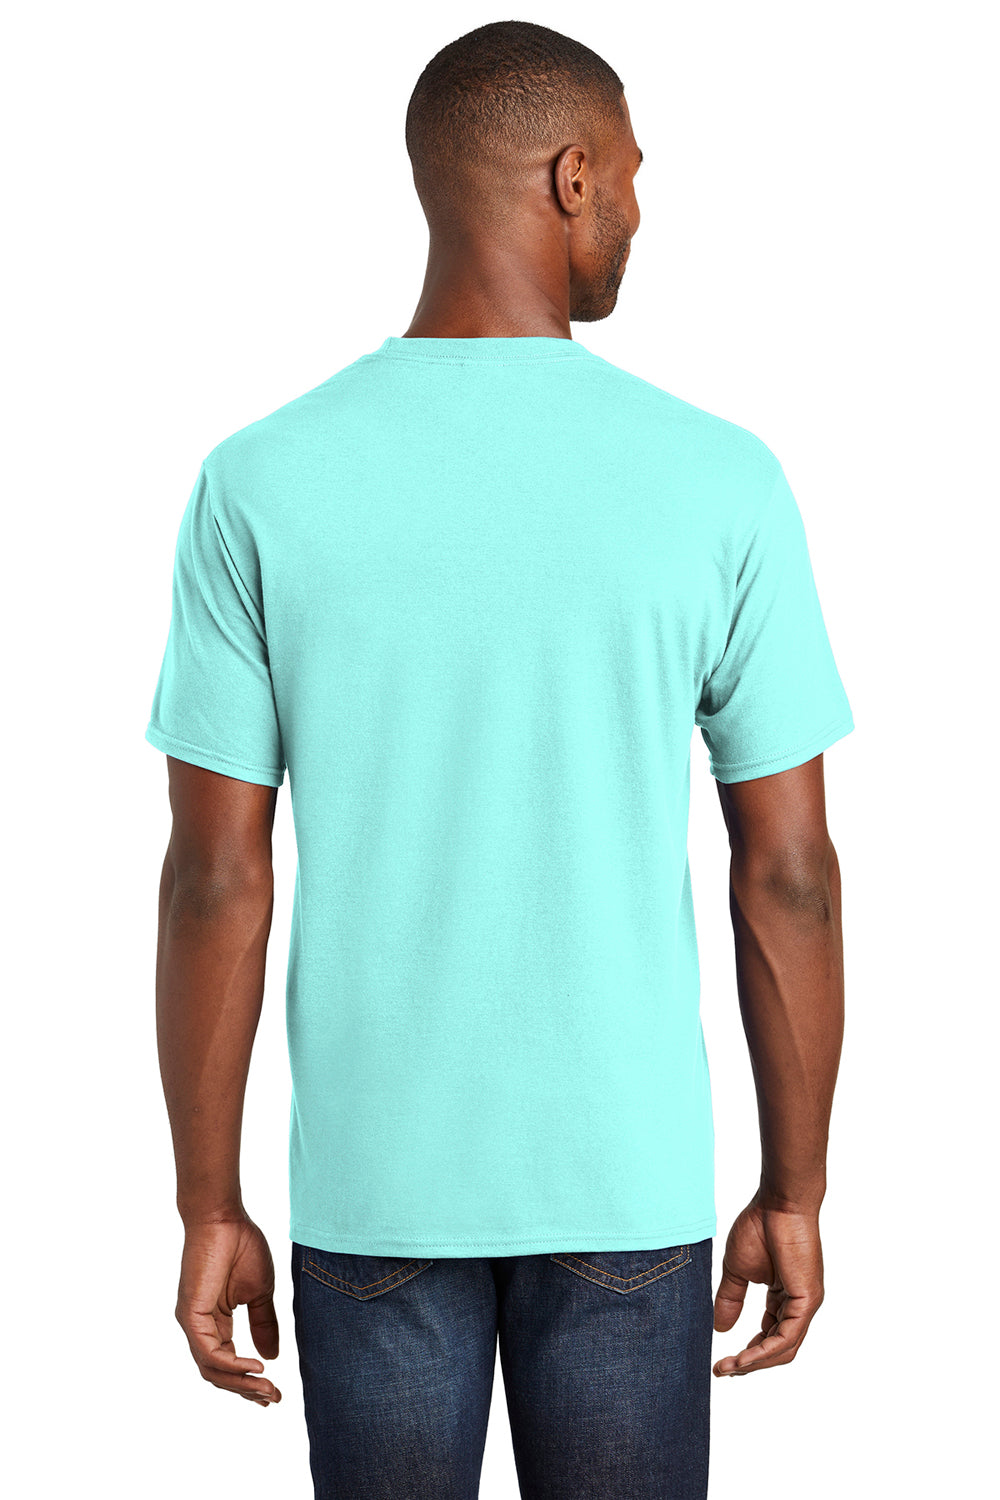 Port & Company PC450 Mens Fan Favorite Short Sleeve Crewneck T-Shirt True Celadon Blue Back